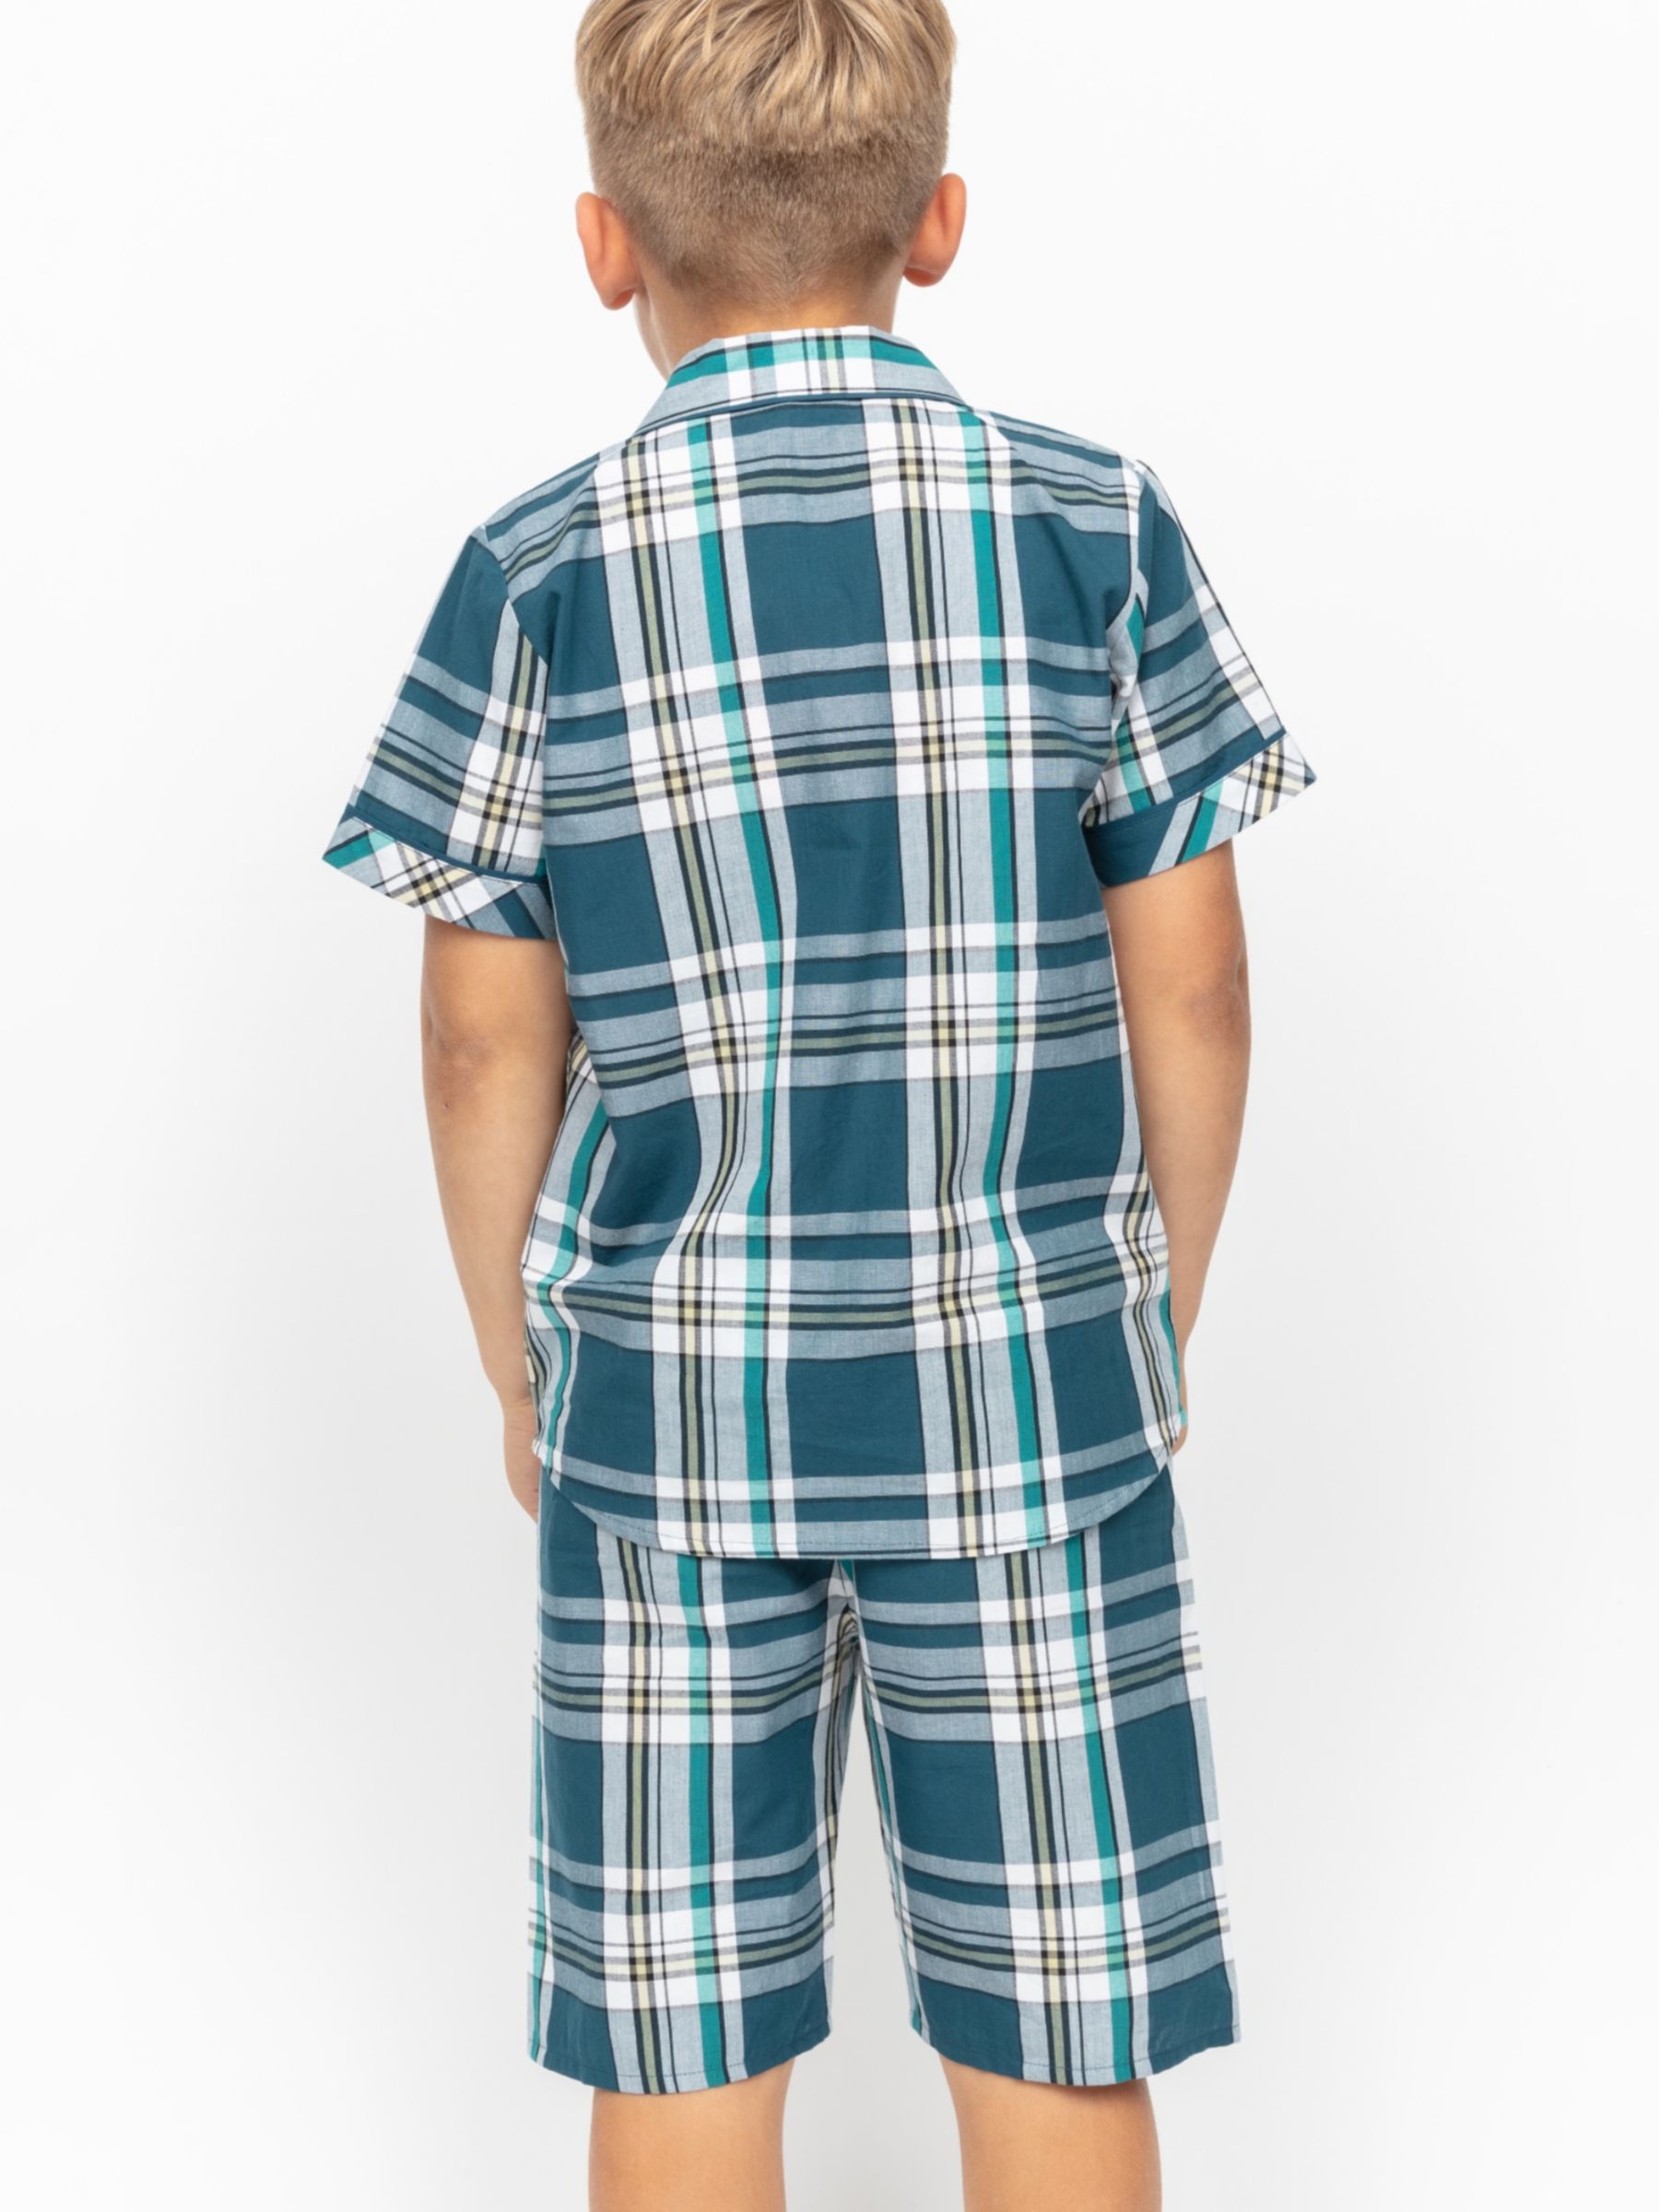 Minijammies Kids' Cove Check Shorty Pyjamas Set, Teal, 2-3 years